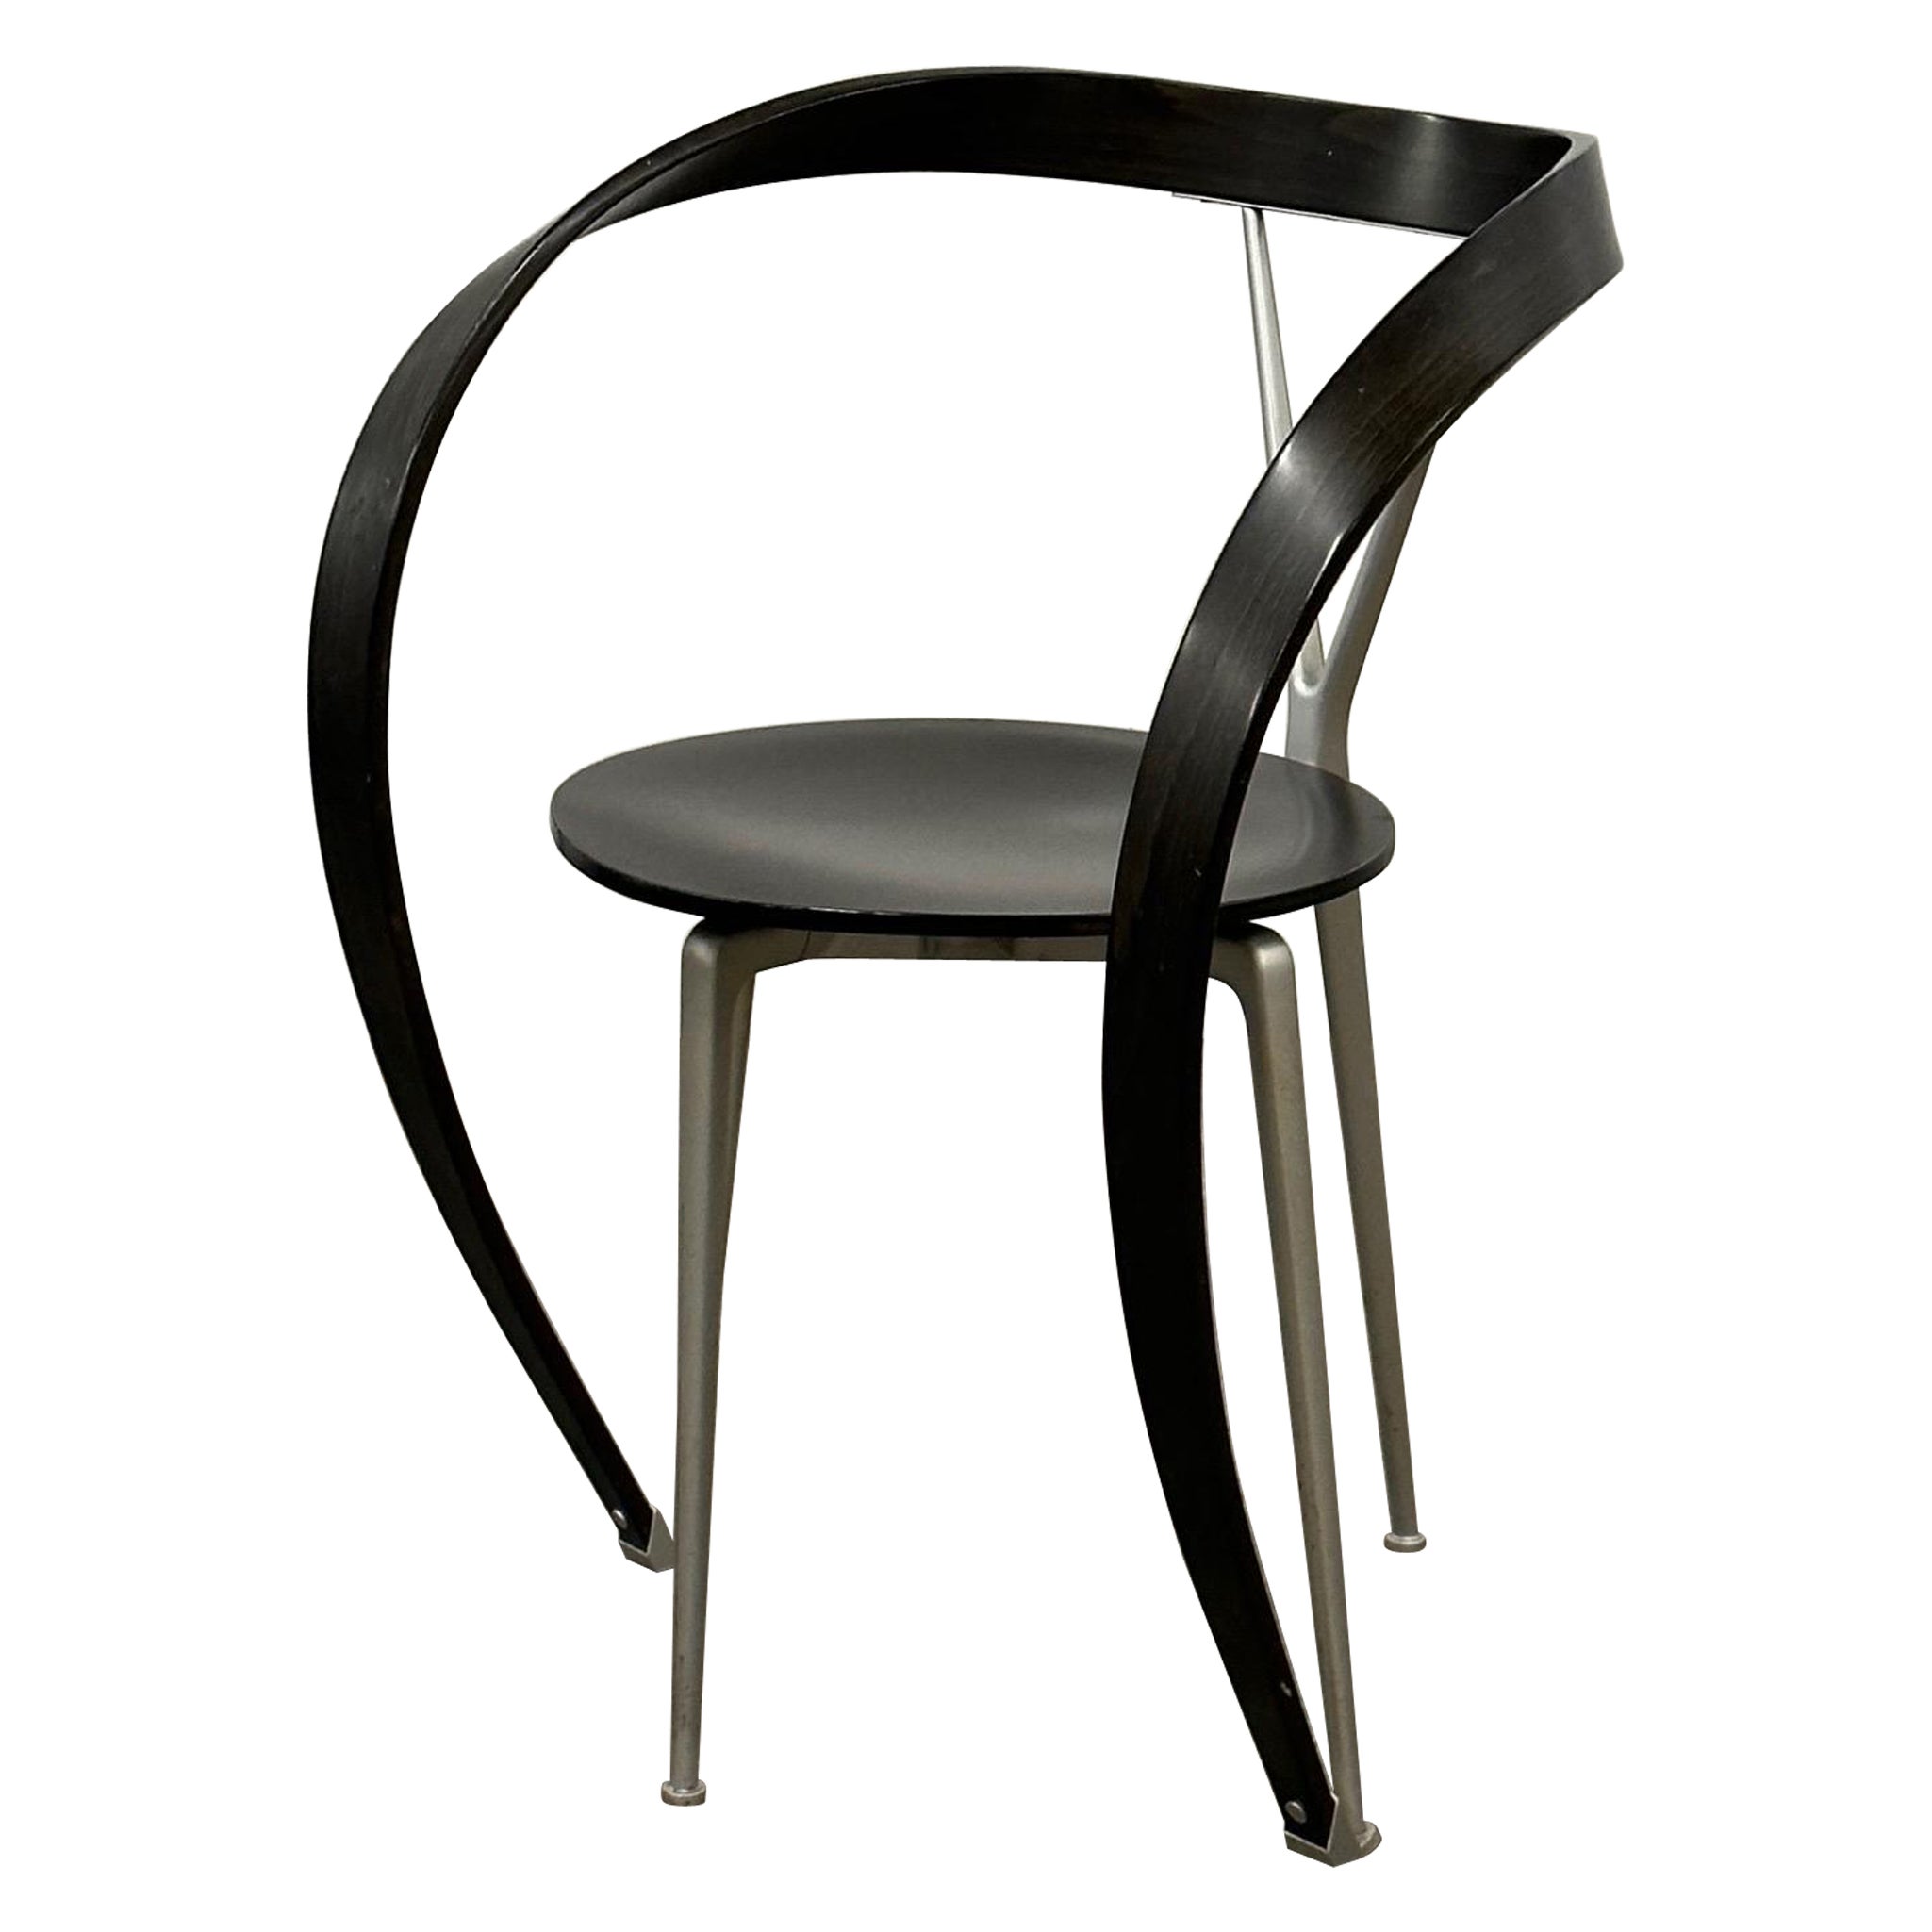 Revers-Stuhl von Andrea Branzi für Cassina